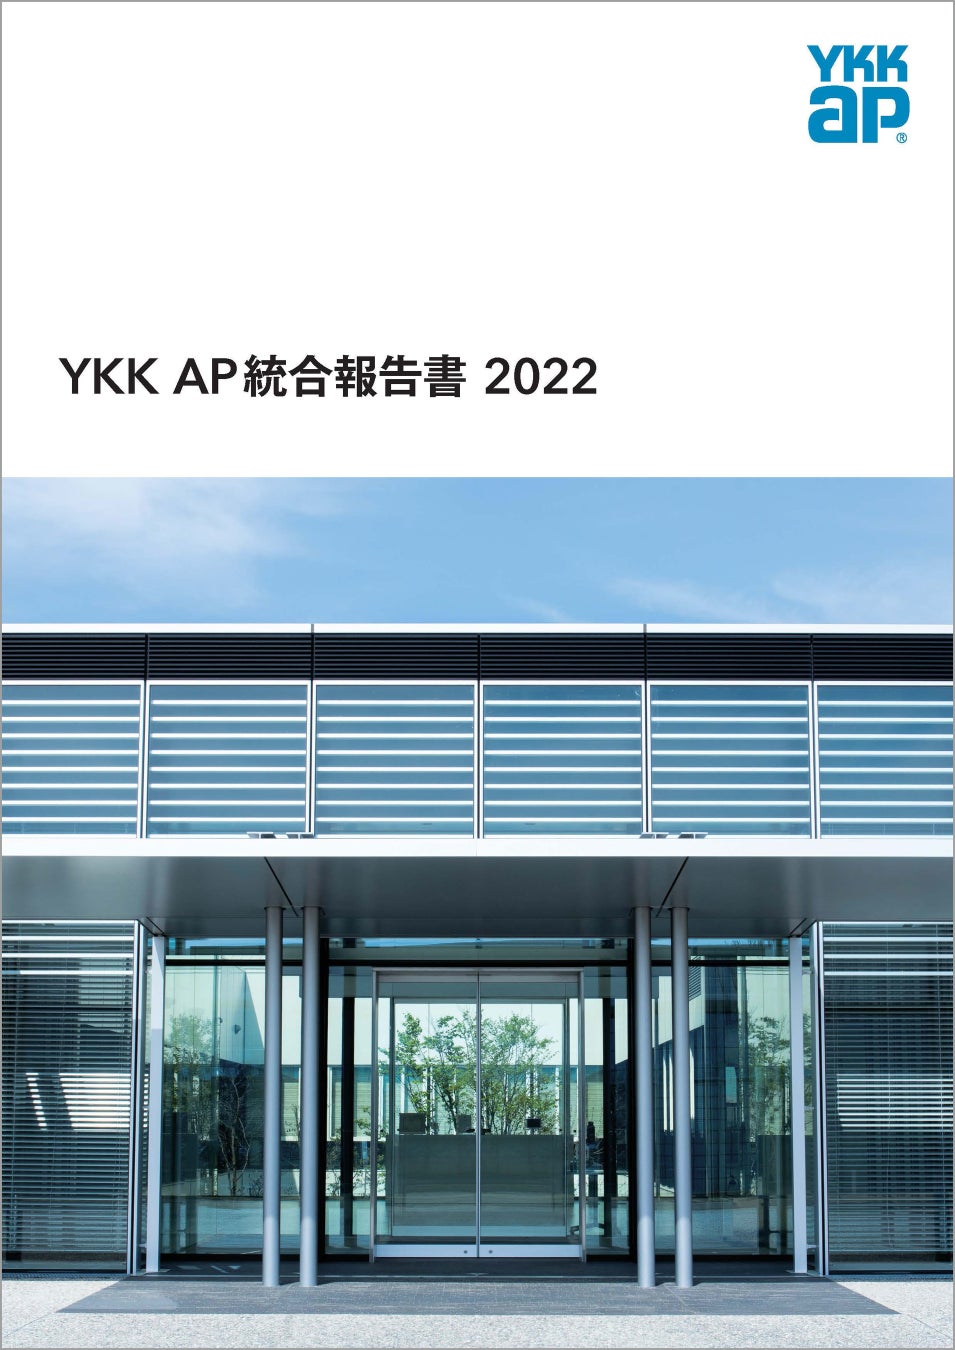 「YKK AP統合報告書 2022」発行のサブ画像1